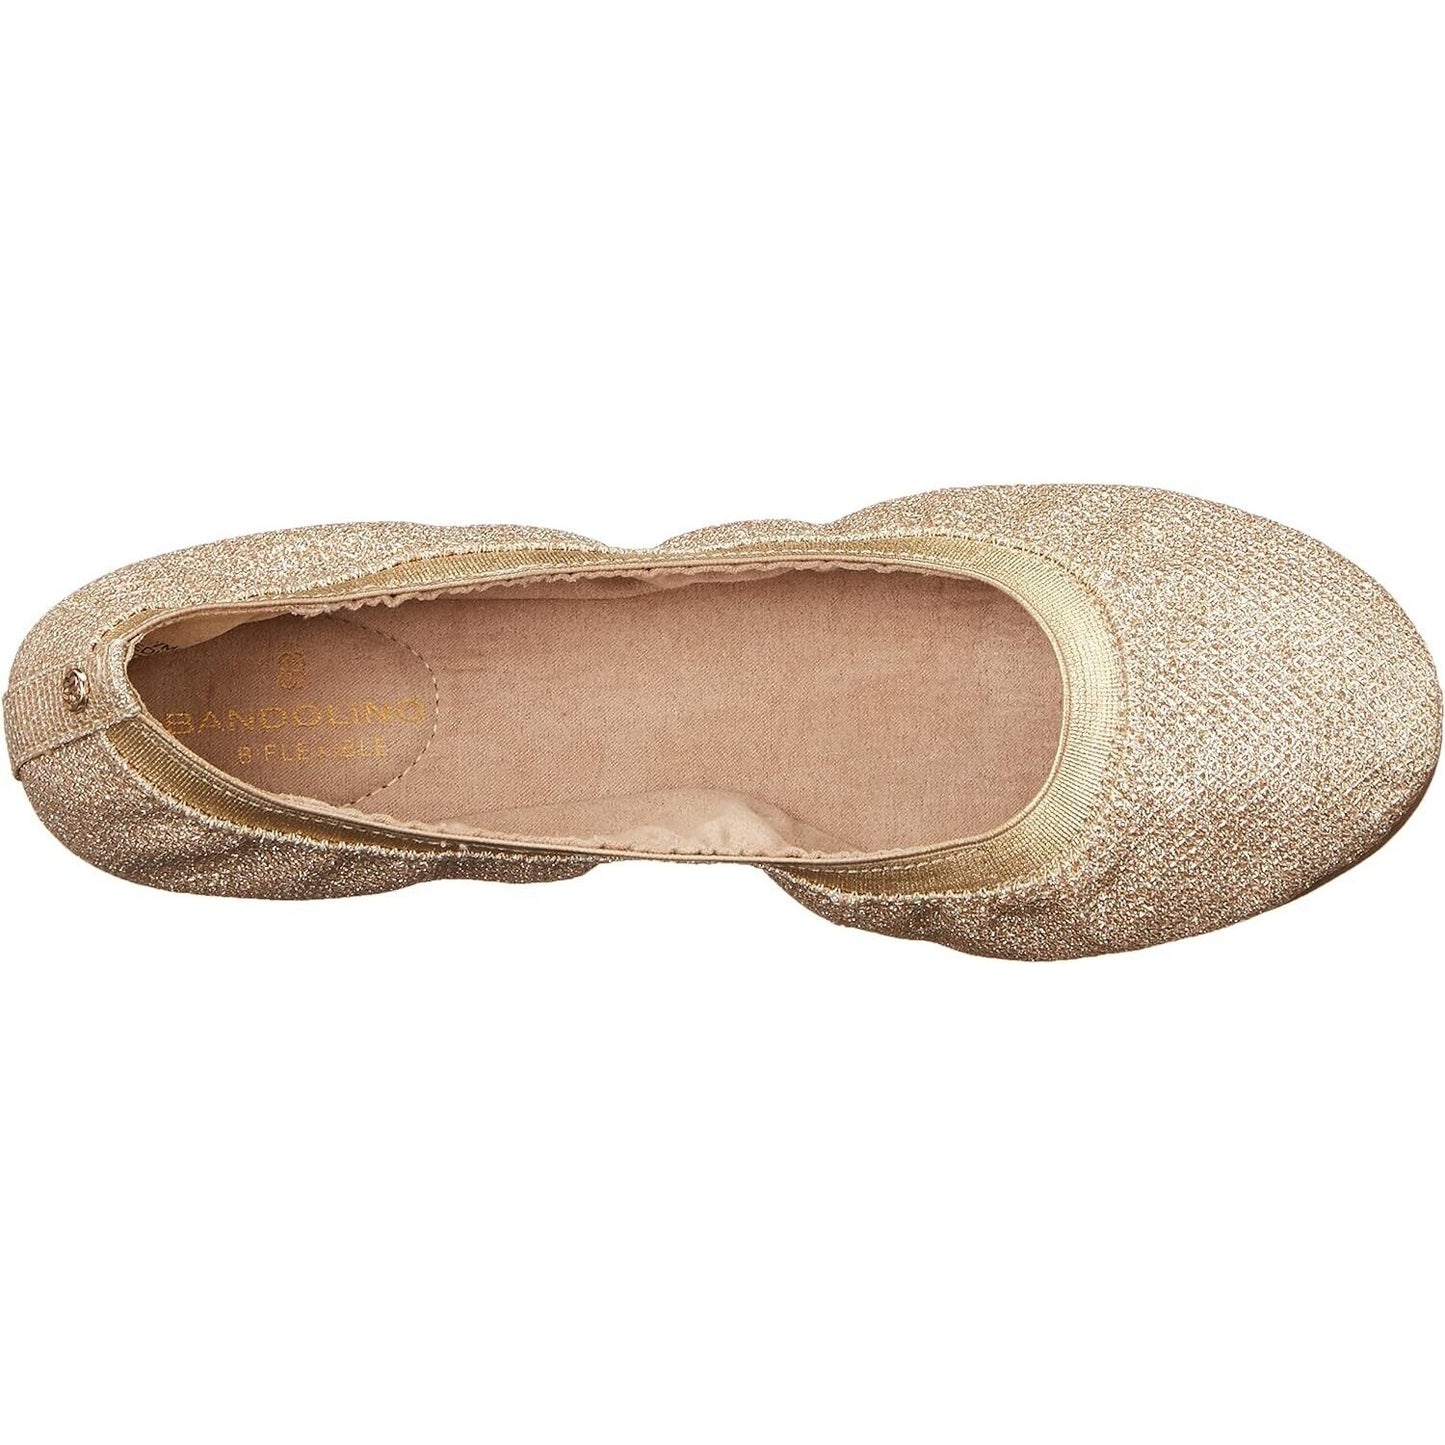 Bandolino Women's Edition Ballet Flats Slip On Round Toe Gold Size 7.5 M